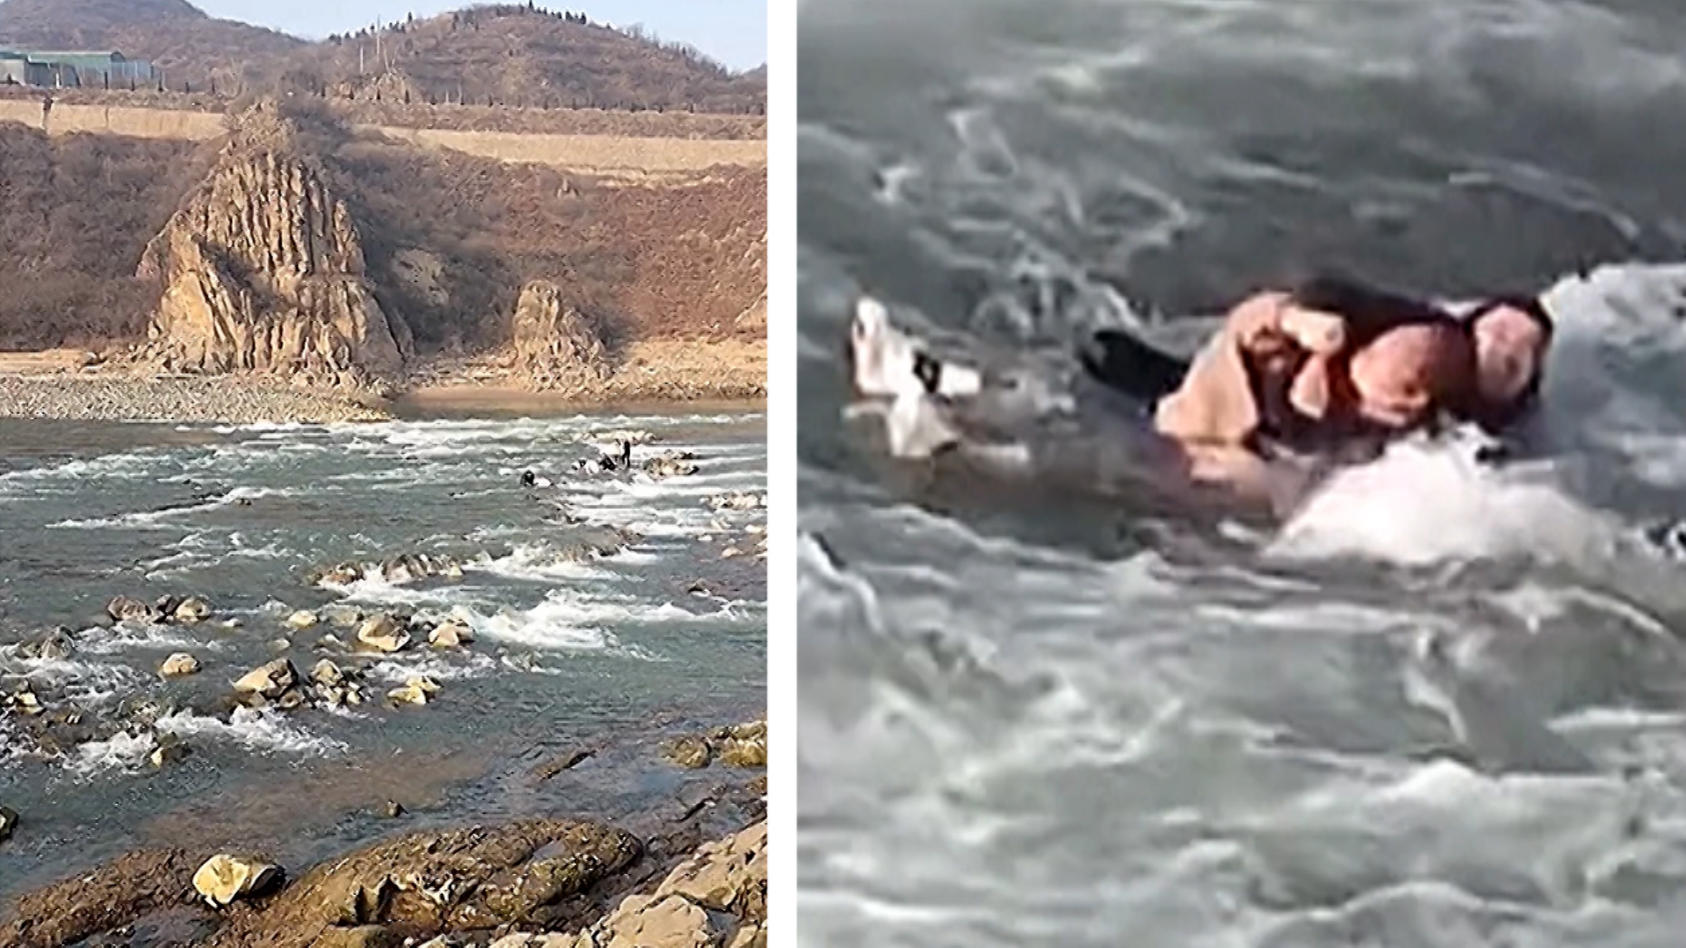 Touristen machen Fotos am Fluss – zwei Menschen sterben Vom Wasser weggespült!